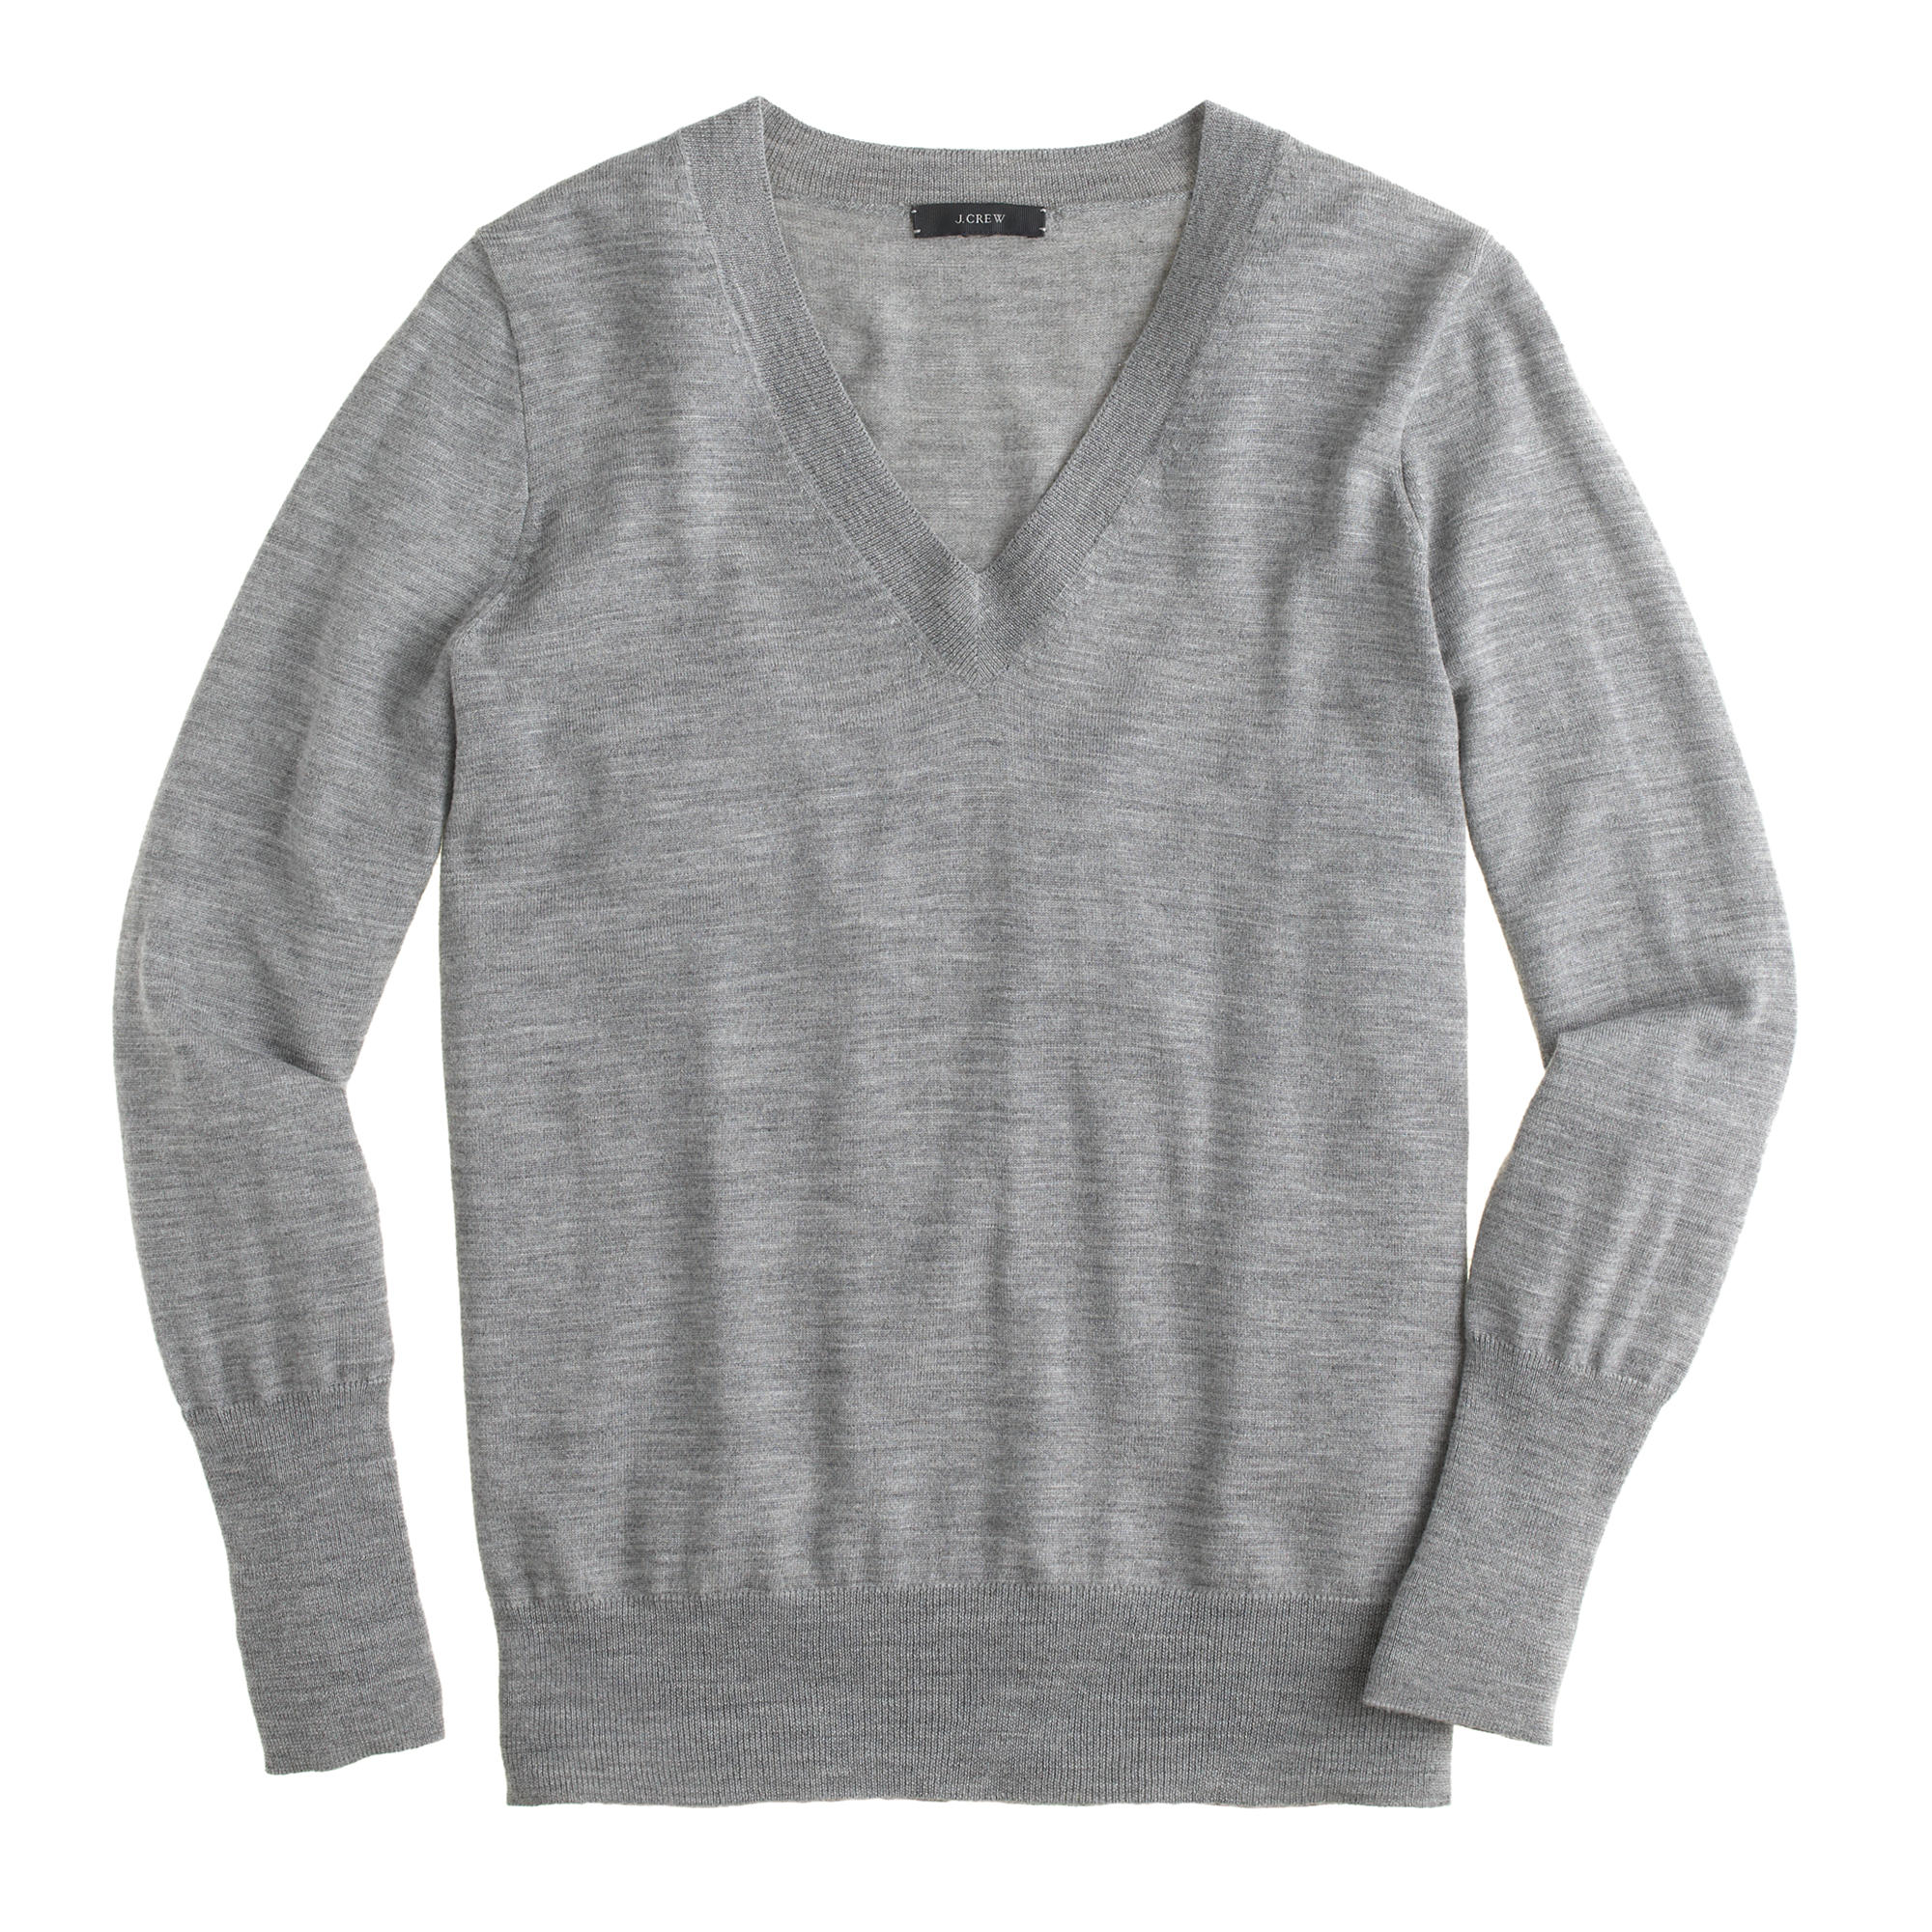 Lyst - J.Crew Merino Wool V-neck Sweater in Gray